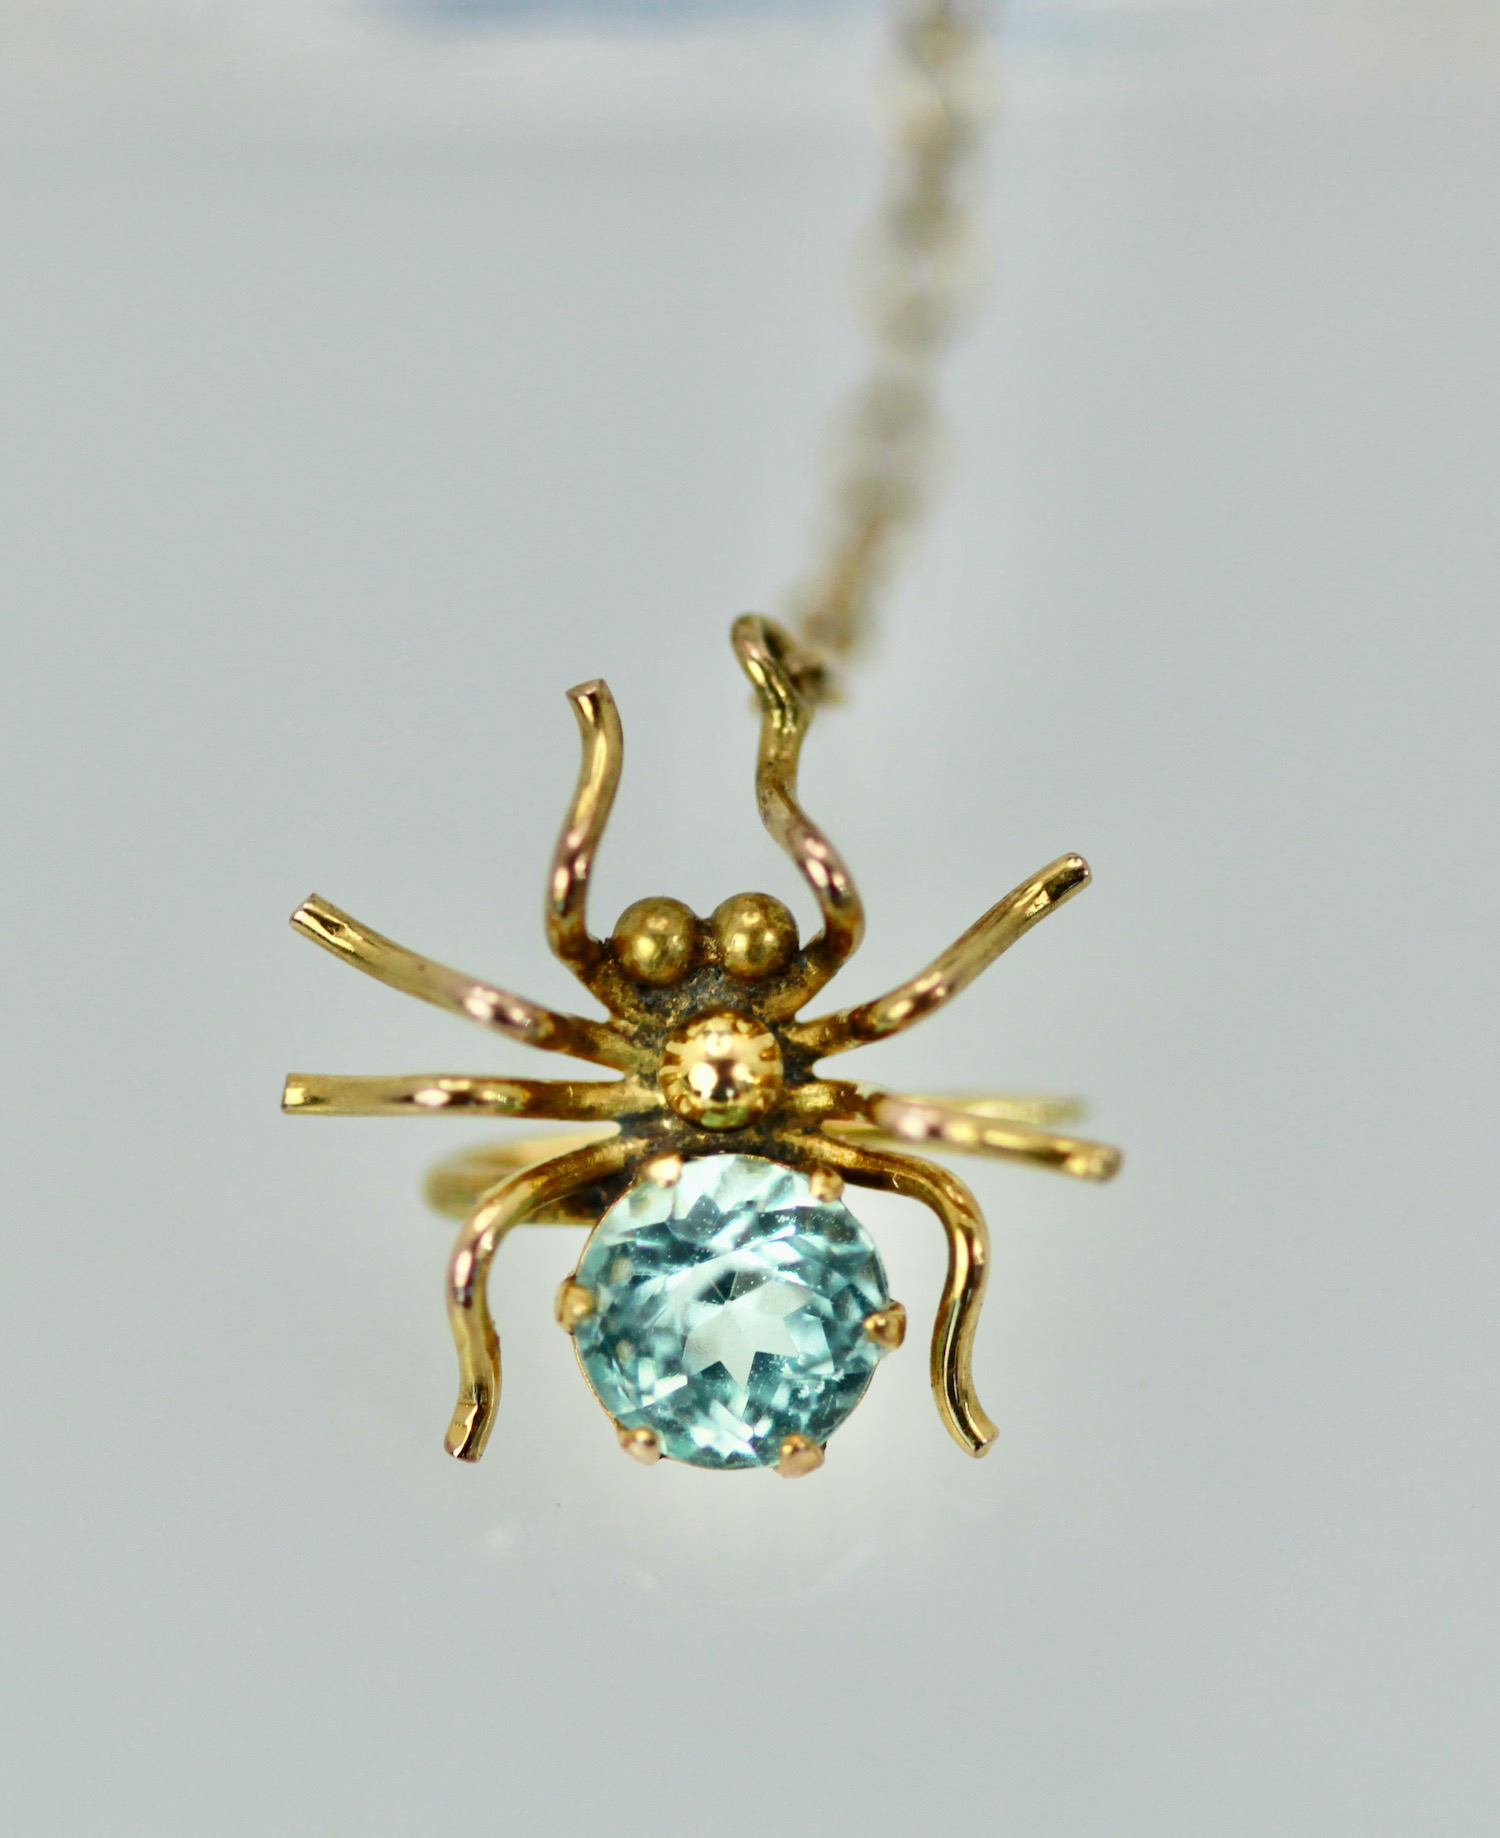 BoneNE Victorian Spider Brooch